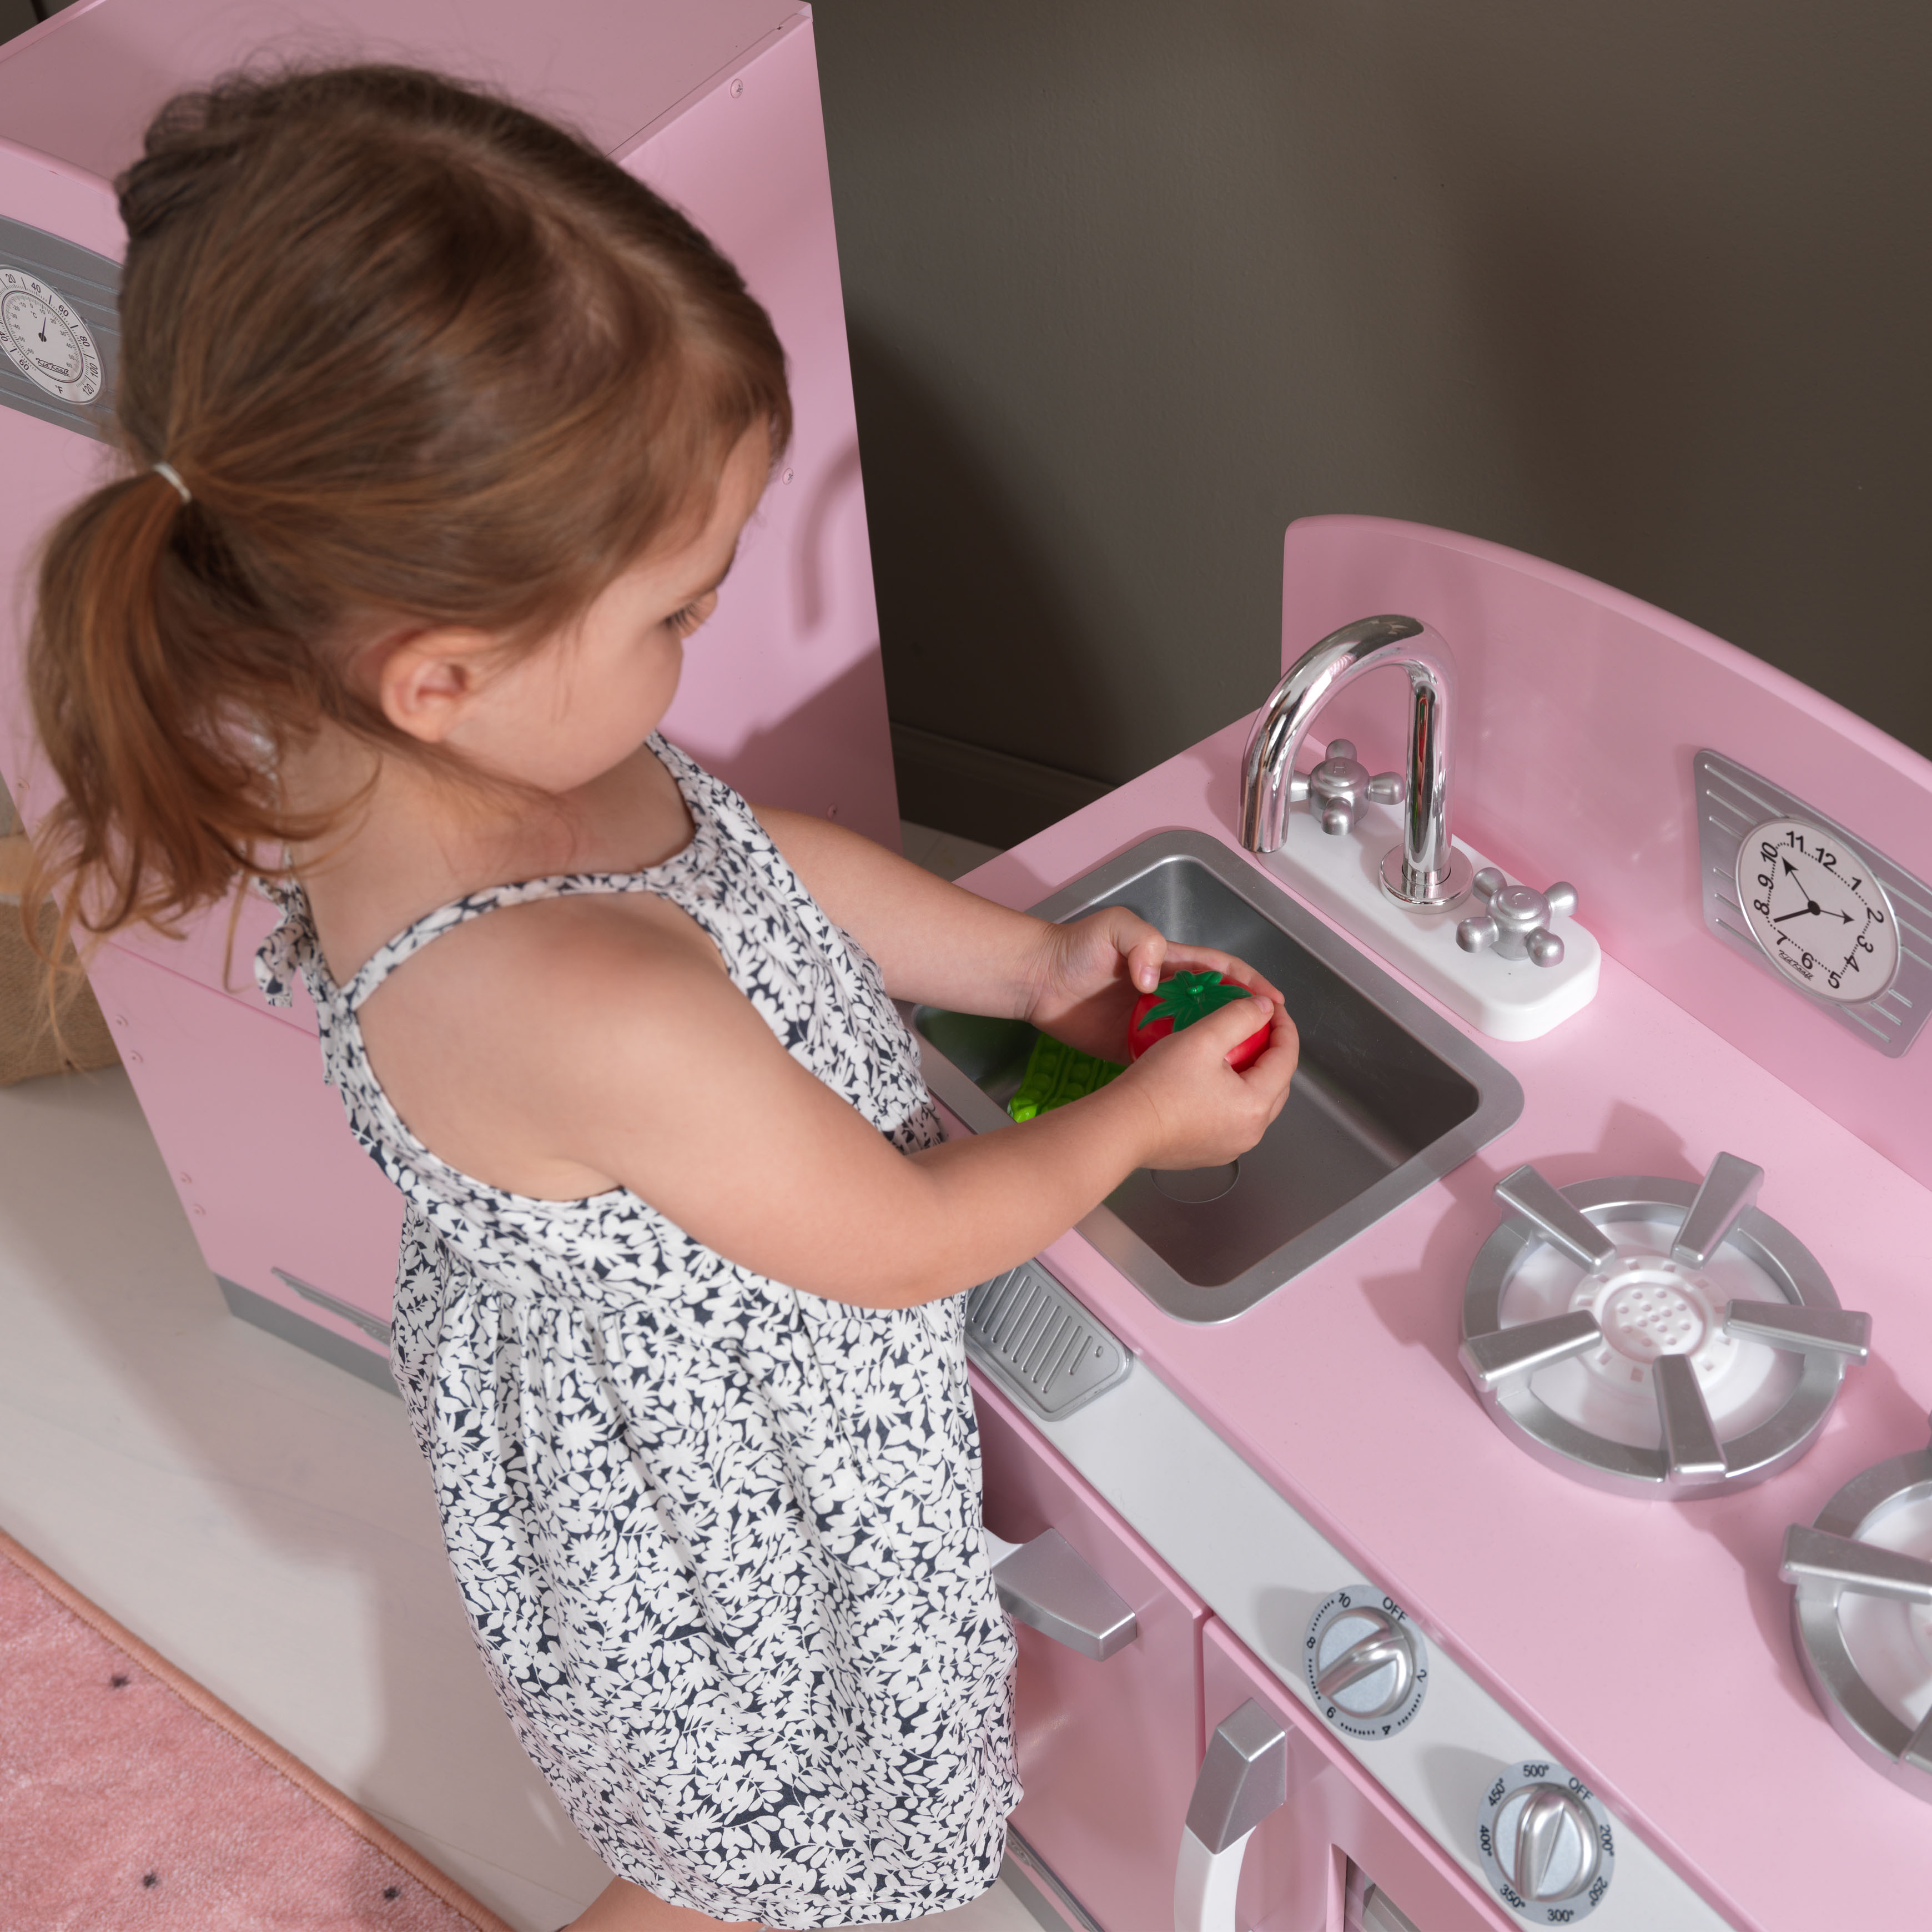 KidKraft Pink Retro Wooden Play Kitchen and Refrigerator 2-Piece Set - image 4 of 14